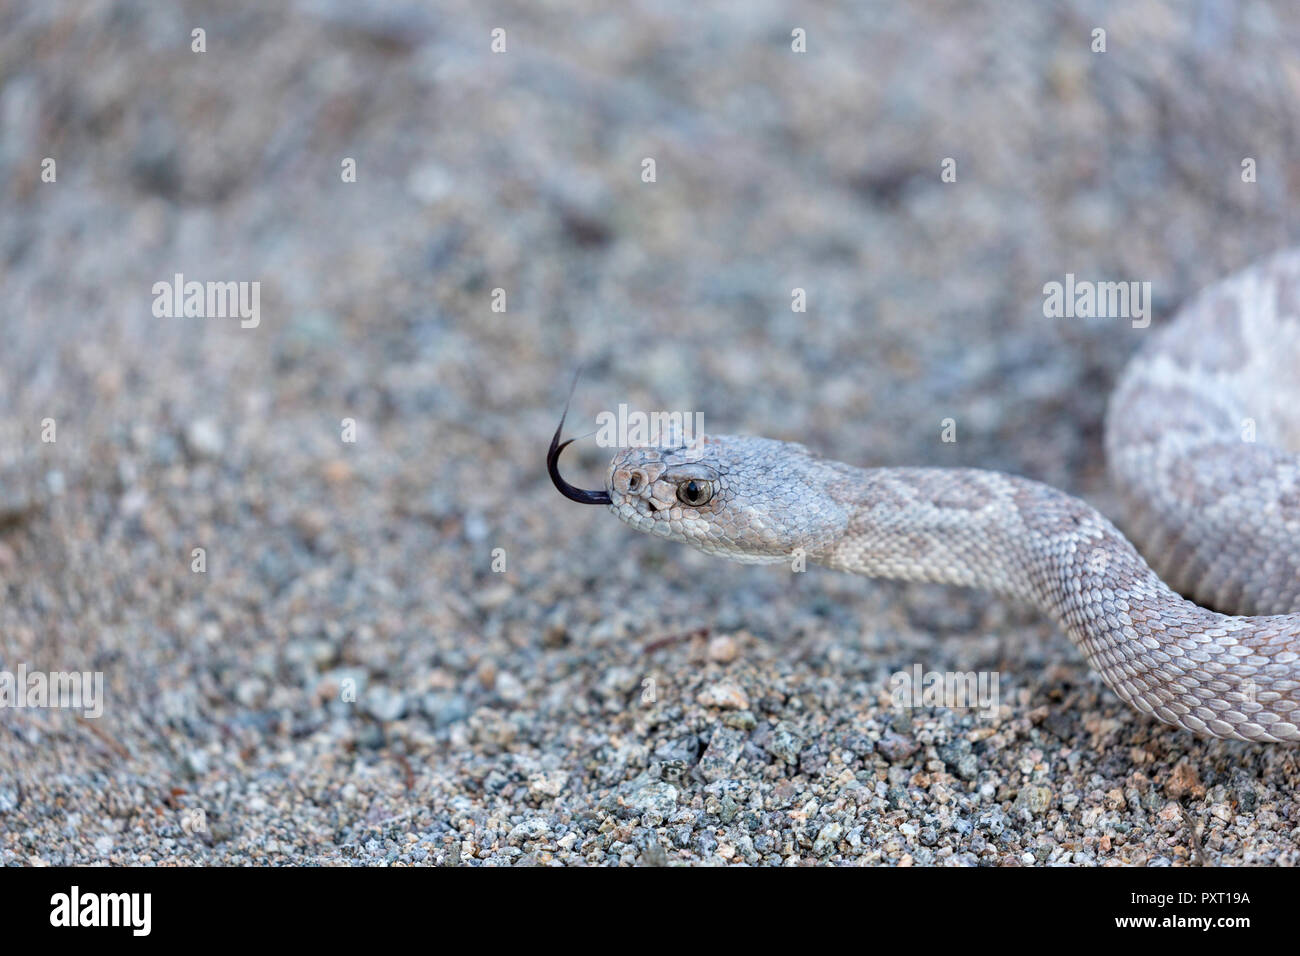 Ash farbige Morph der endemischen rattleless Klapperschlange, Crotalus catalinensis, Isla Santa Catalina, Baja California Sur, Mexiko Stockfoto